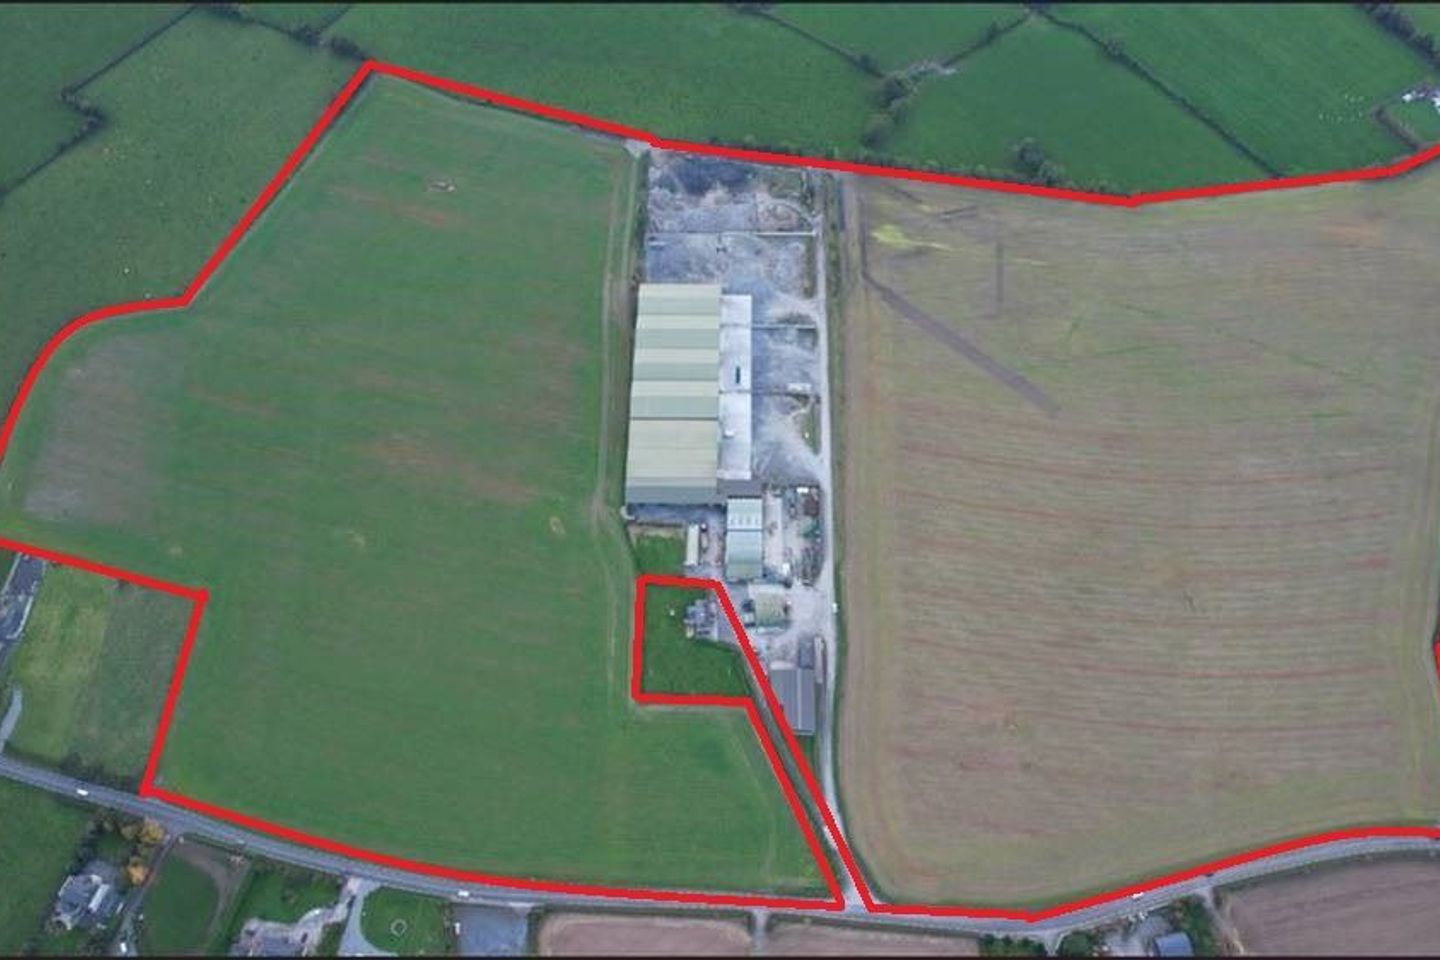 34.96 hectares at Davidstown Upper, Castledermot, Co. Kildare